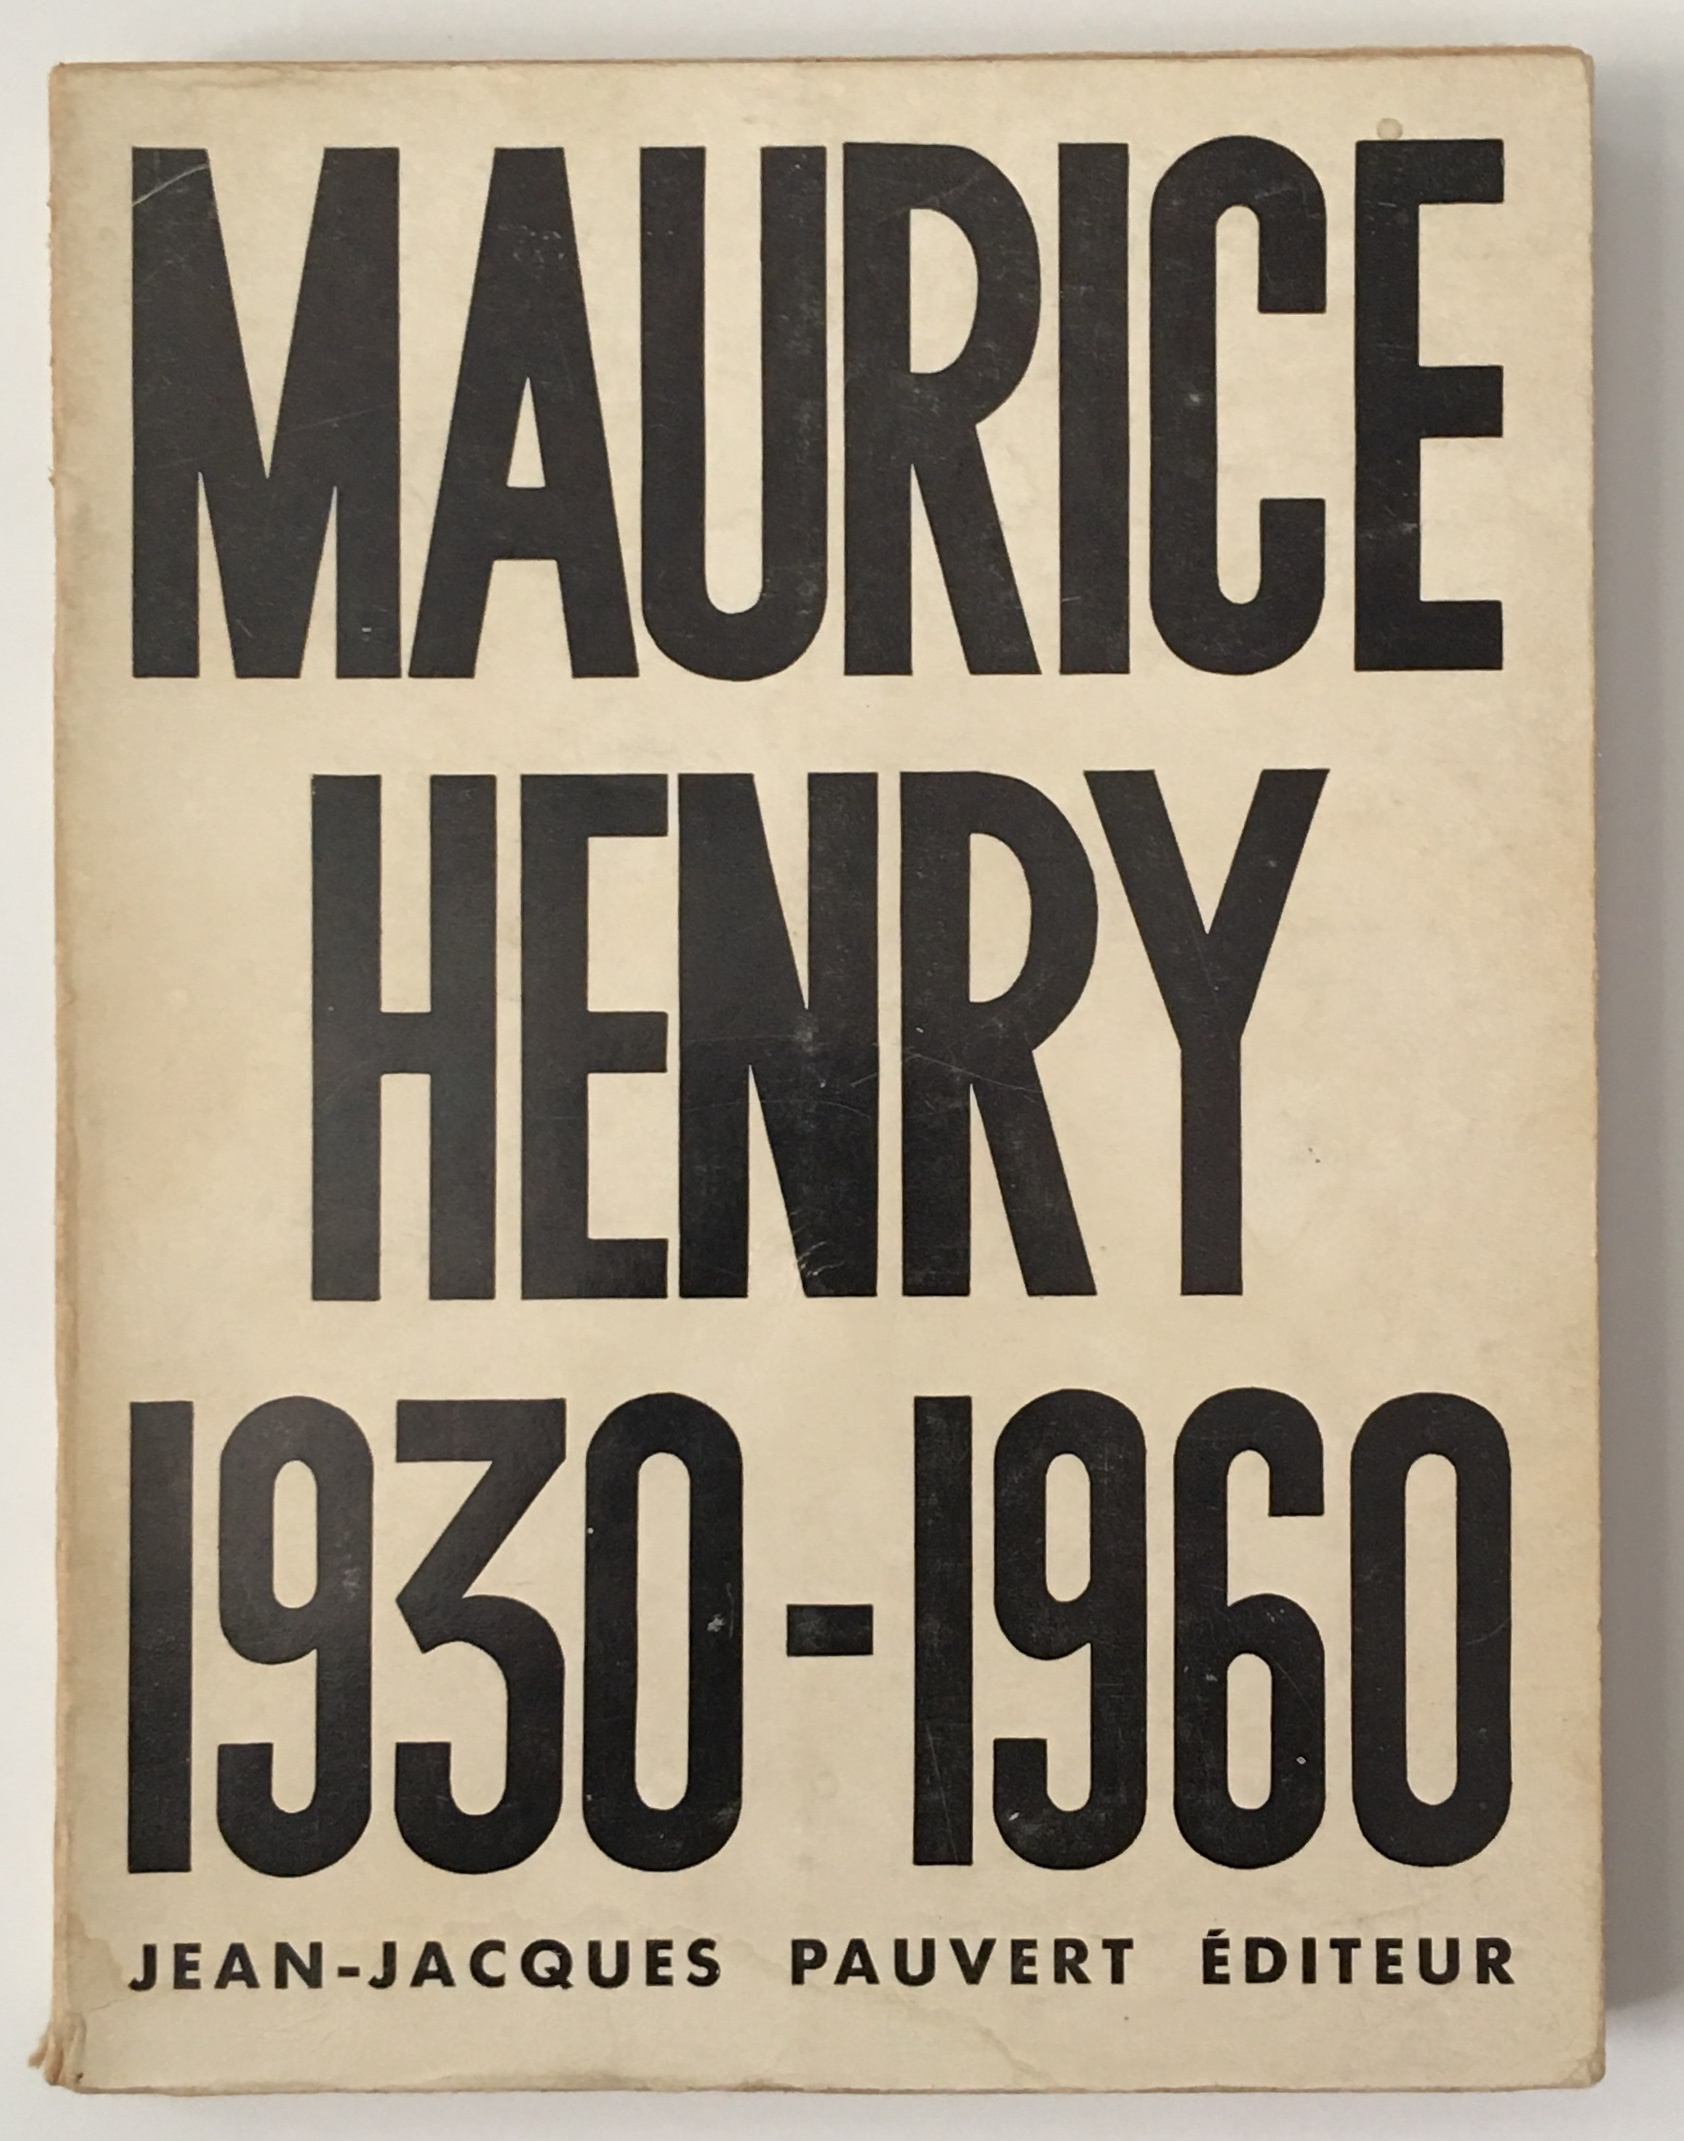 Maurice Henry 1930-1960